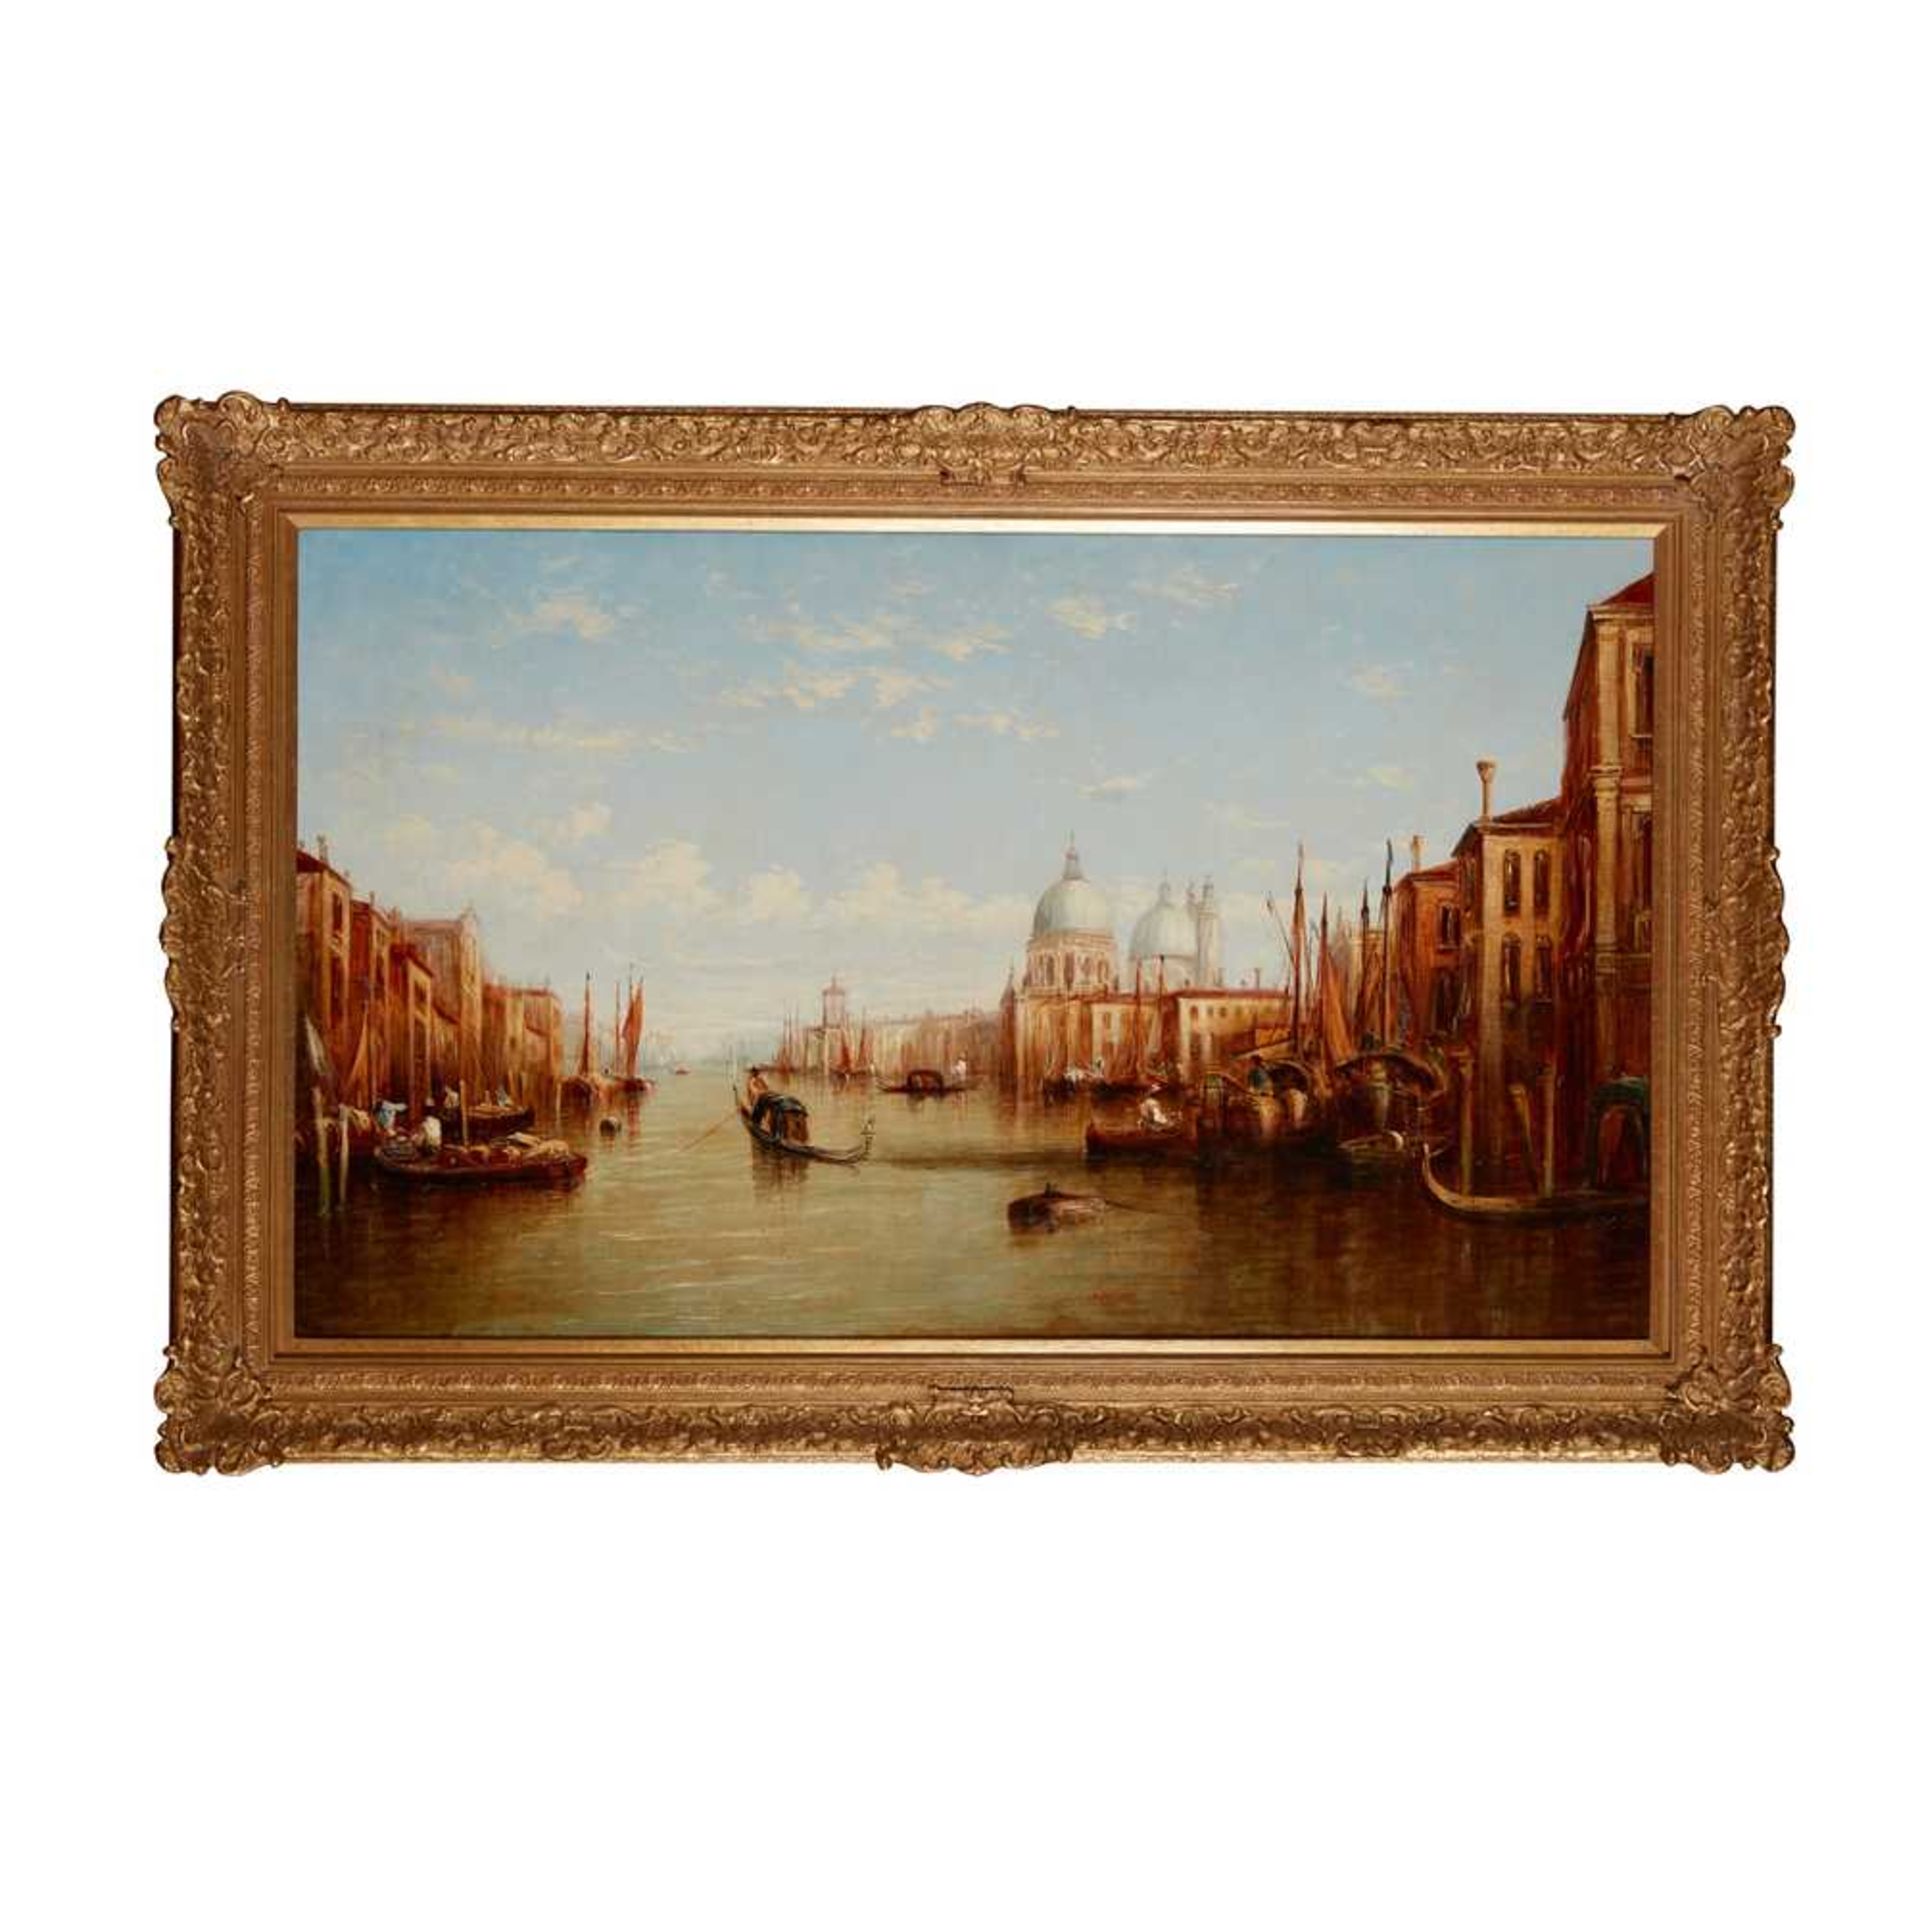 FRANCIS MALTINO (BRITISH 1818-1874) ON THE GRAND CANAL, VENICE